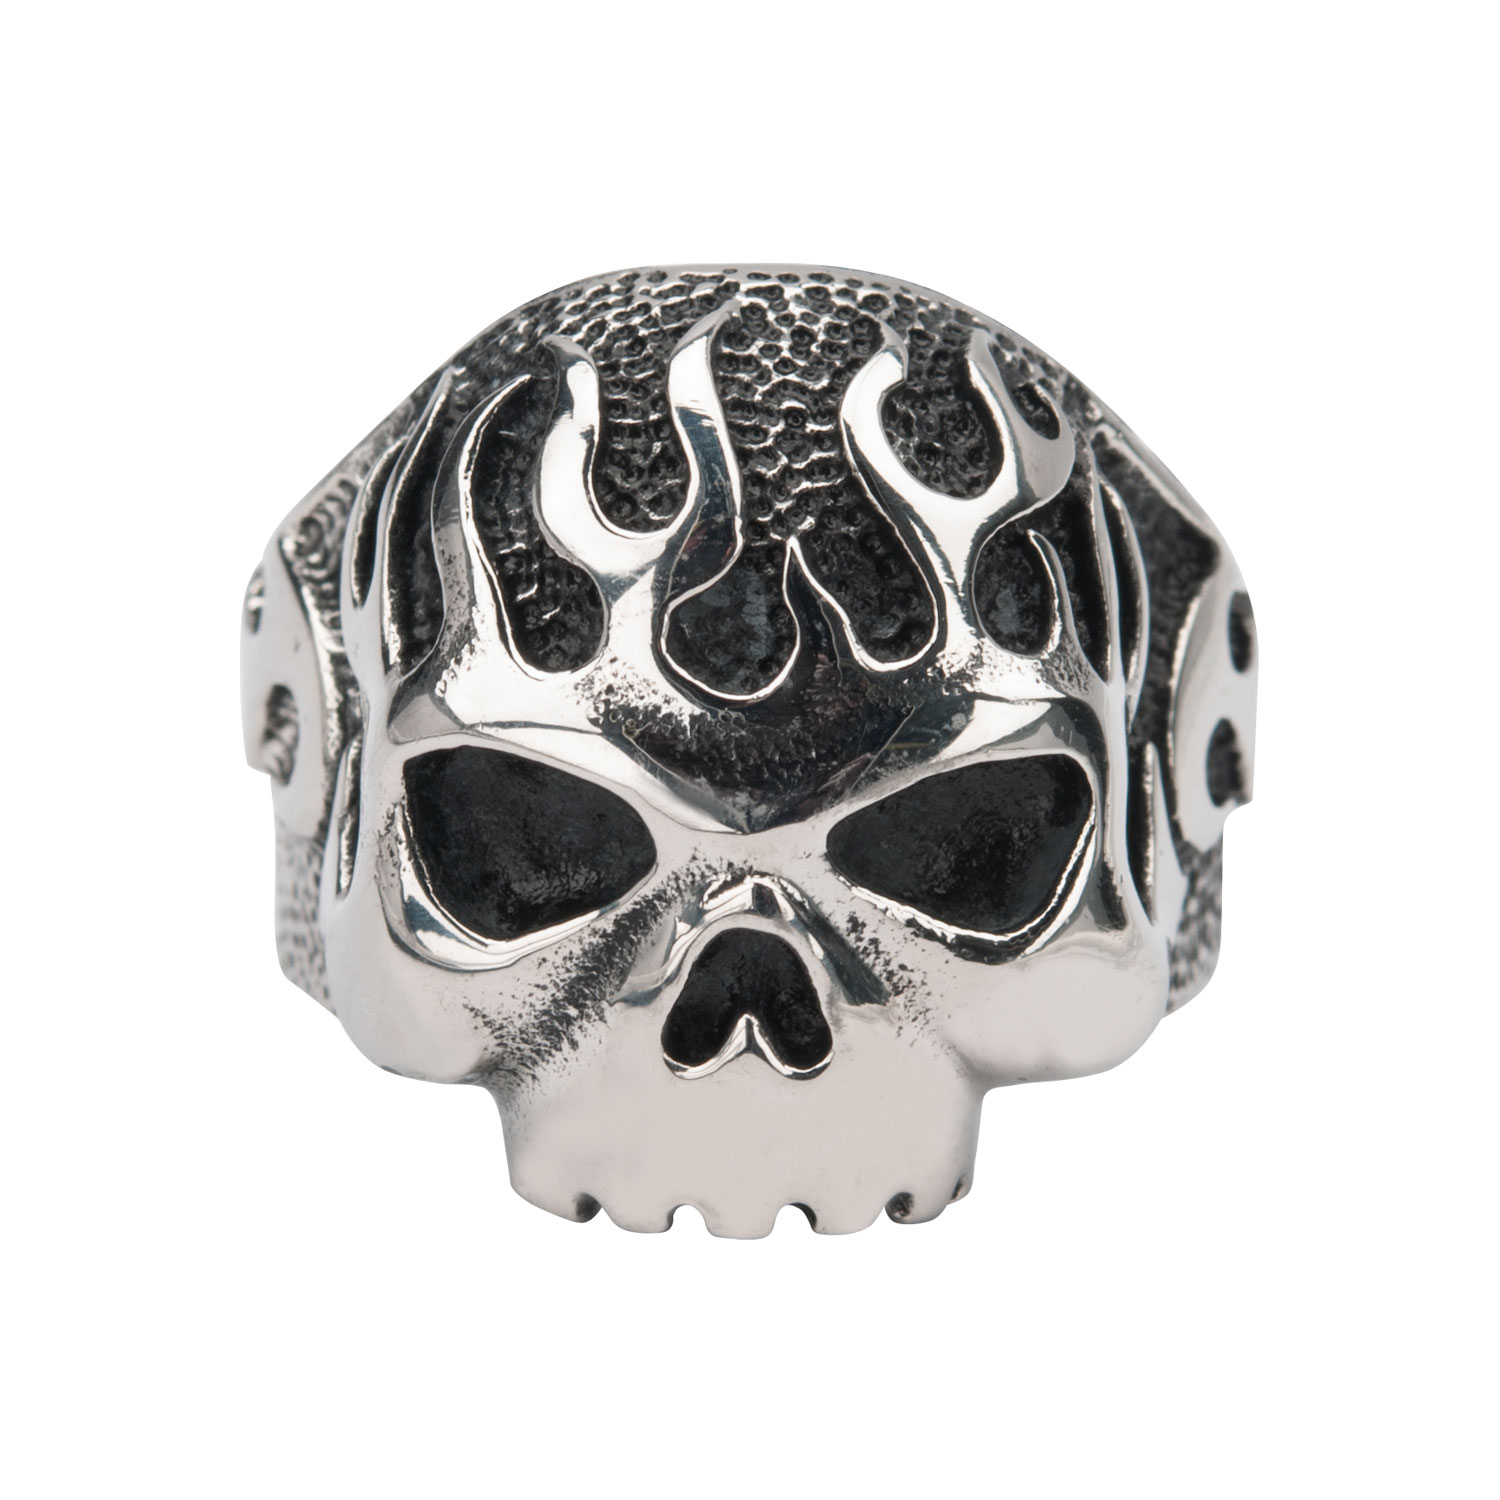 Black Oxidixed Flamed Skull Ring Image 2 Morin Jewelers Southbridge, MA